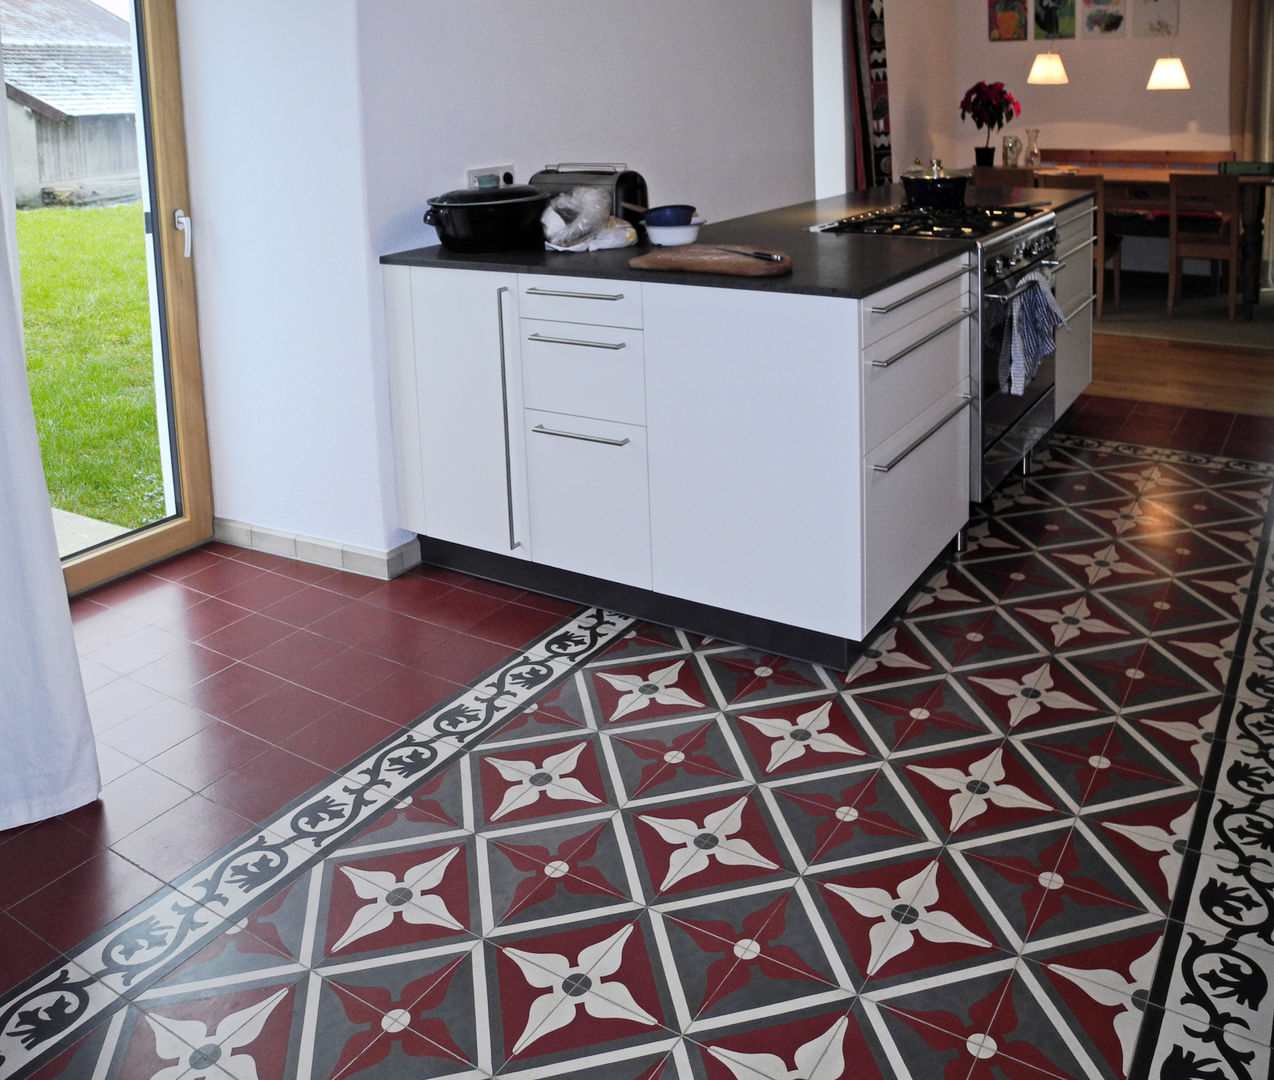 Encaustic Cement Tiles with Endless Pattern Combination, Original Features Original Features Walls Tiles